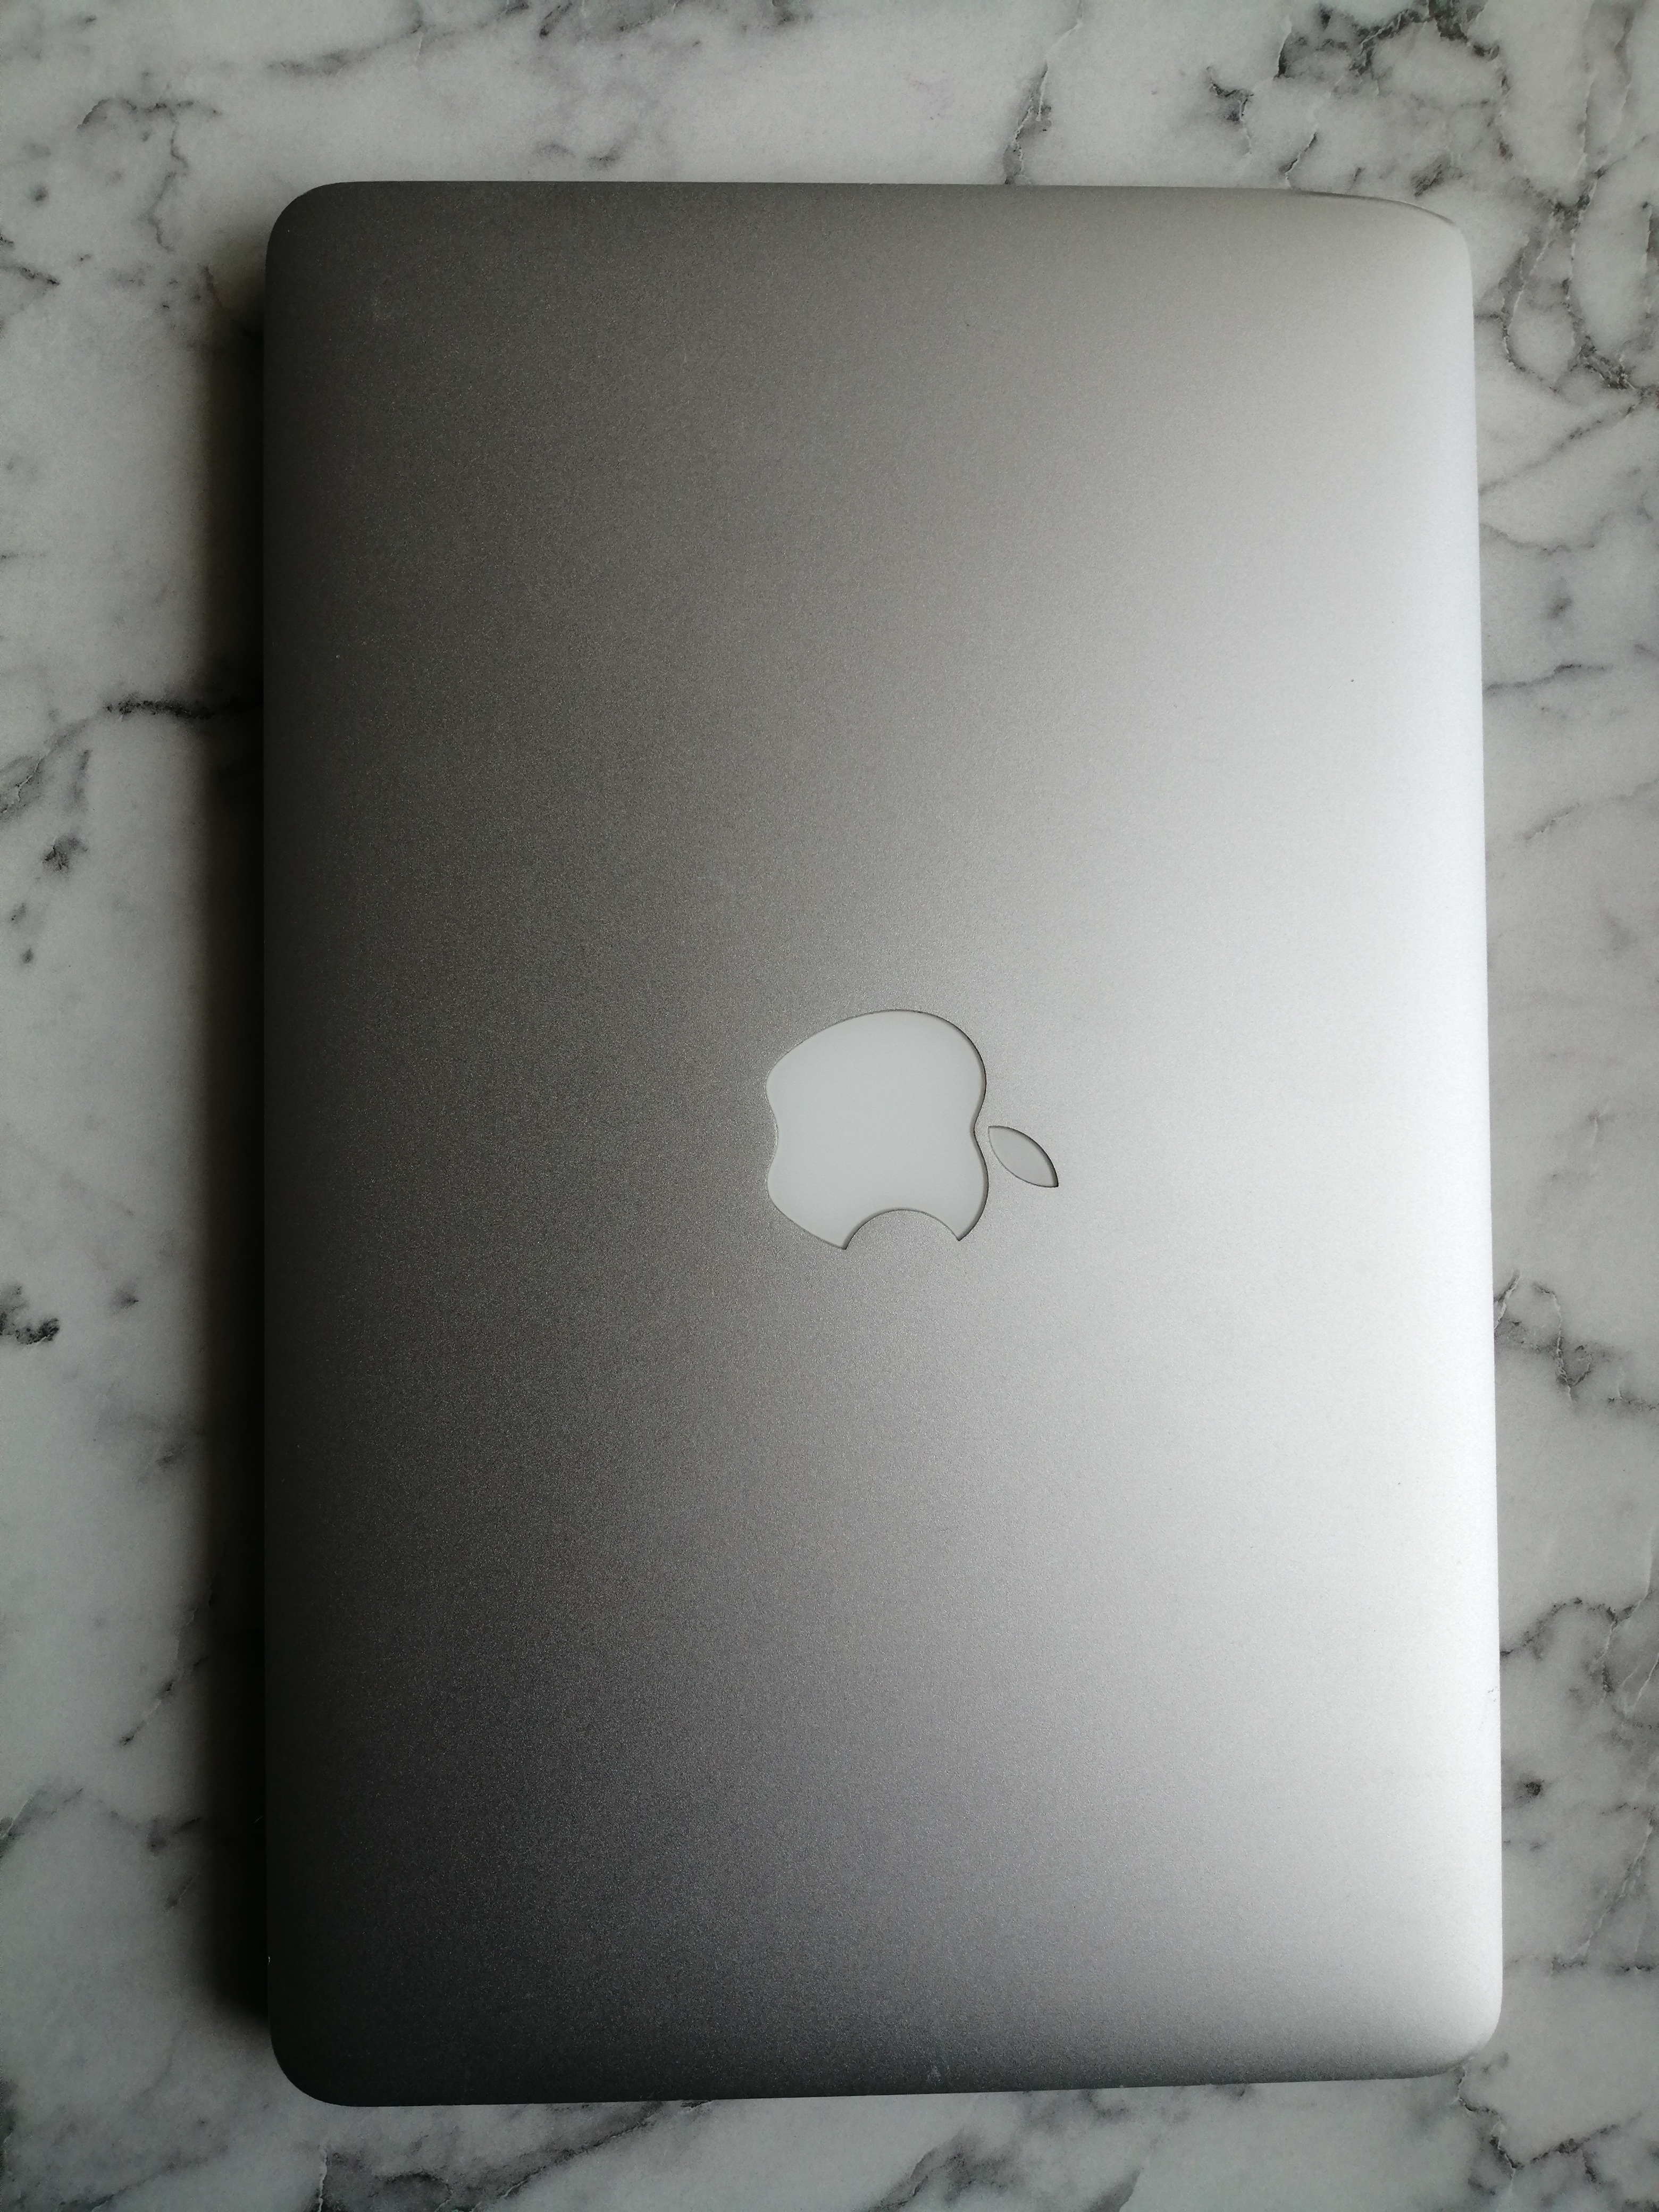 Satılık Apple Macbook Air 11 inç Mid 2011 Intel Core i5 1,66 GHz |  DonanımHaber Forum